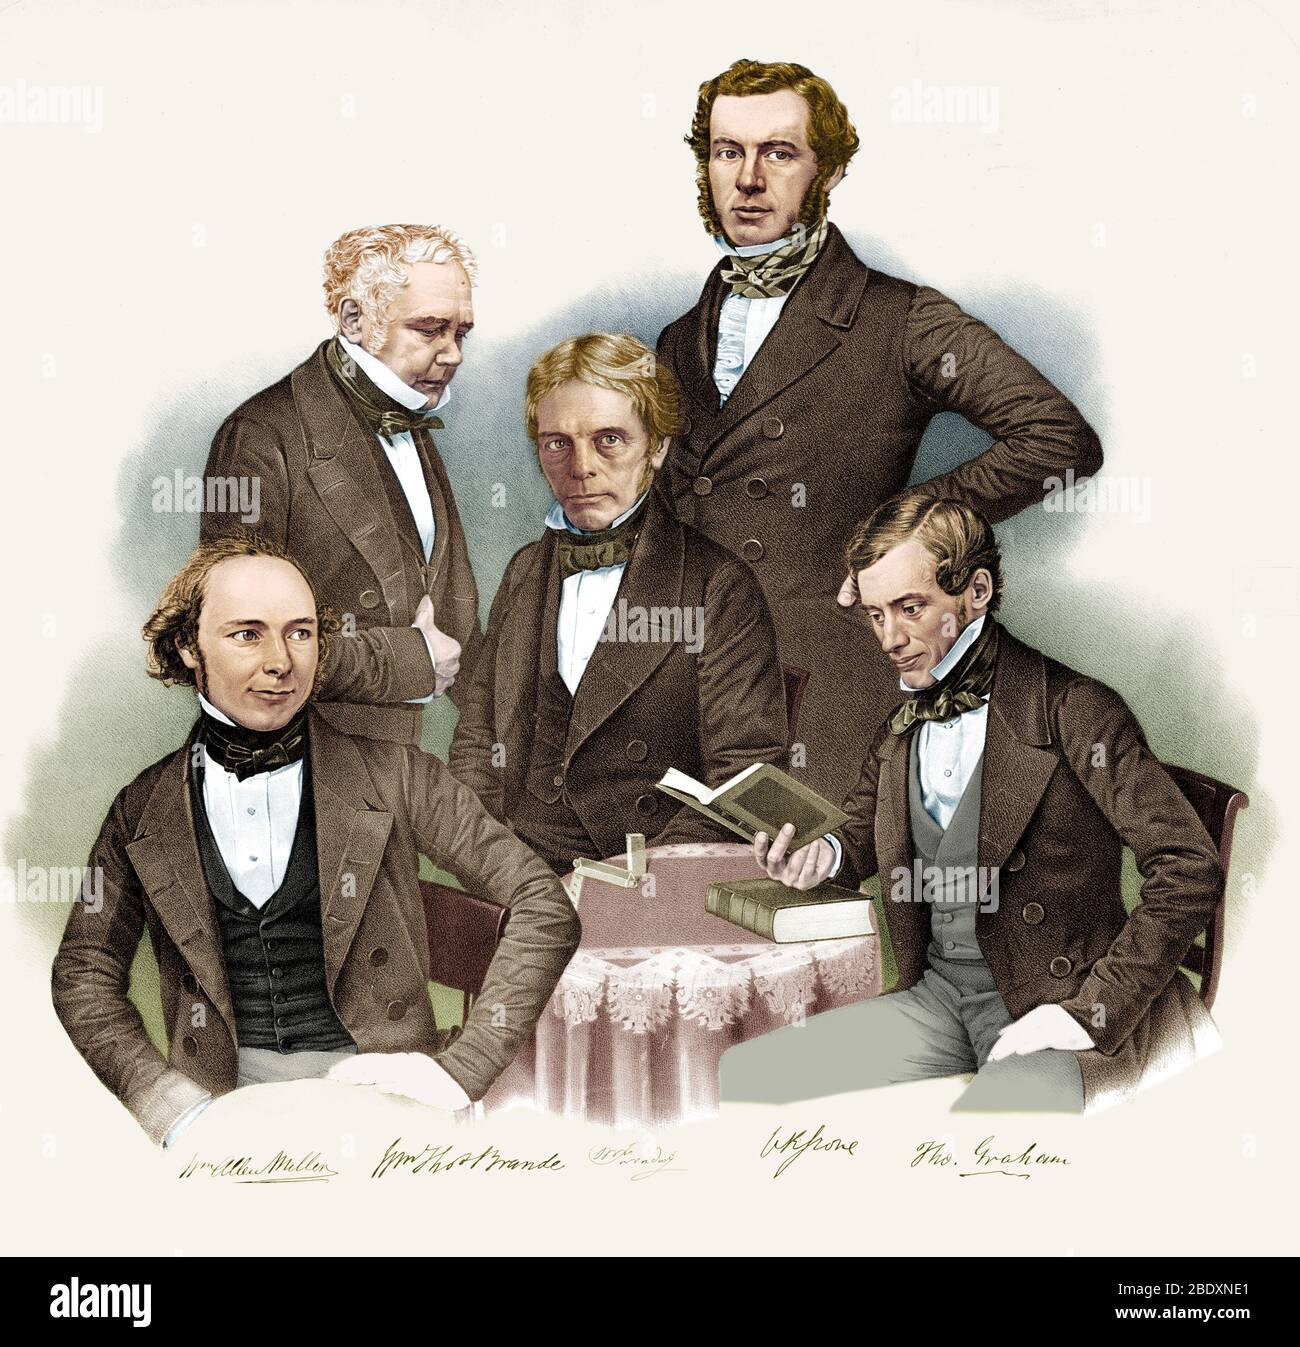 Famosos químicos ingleses, 1850 Foto de stock